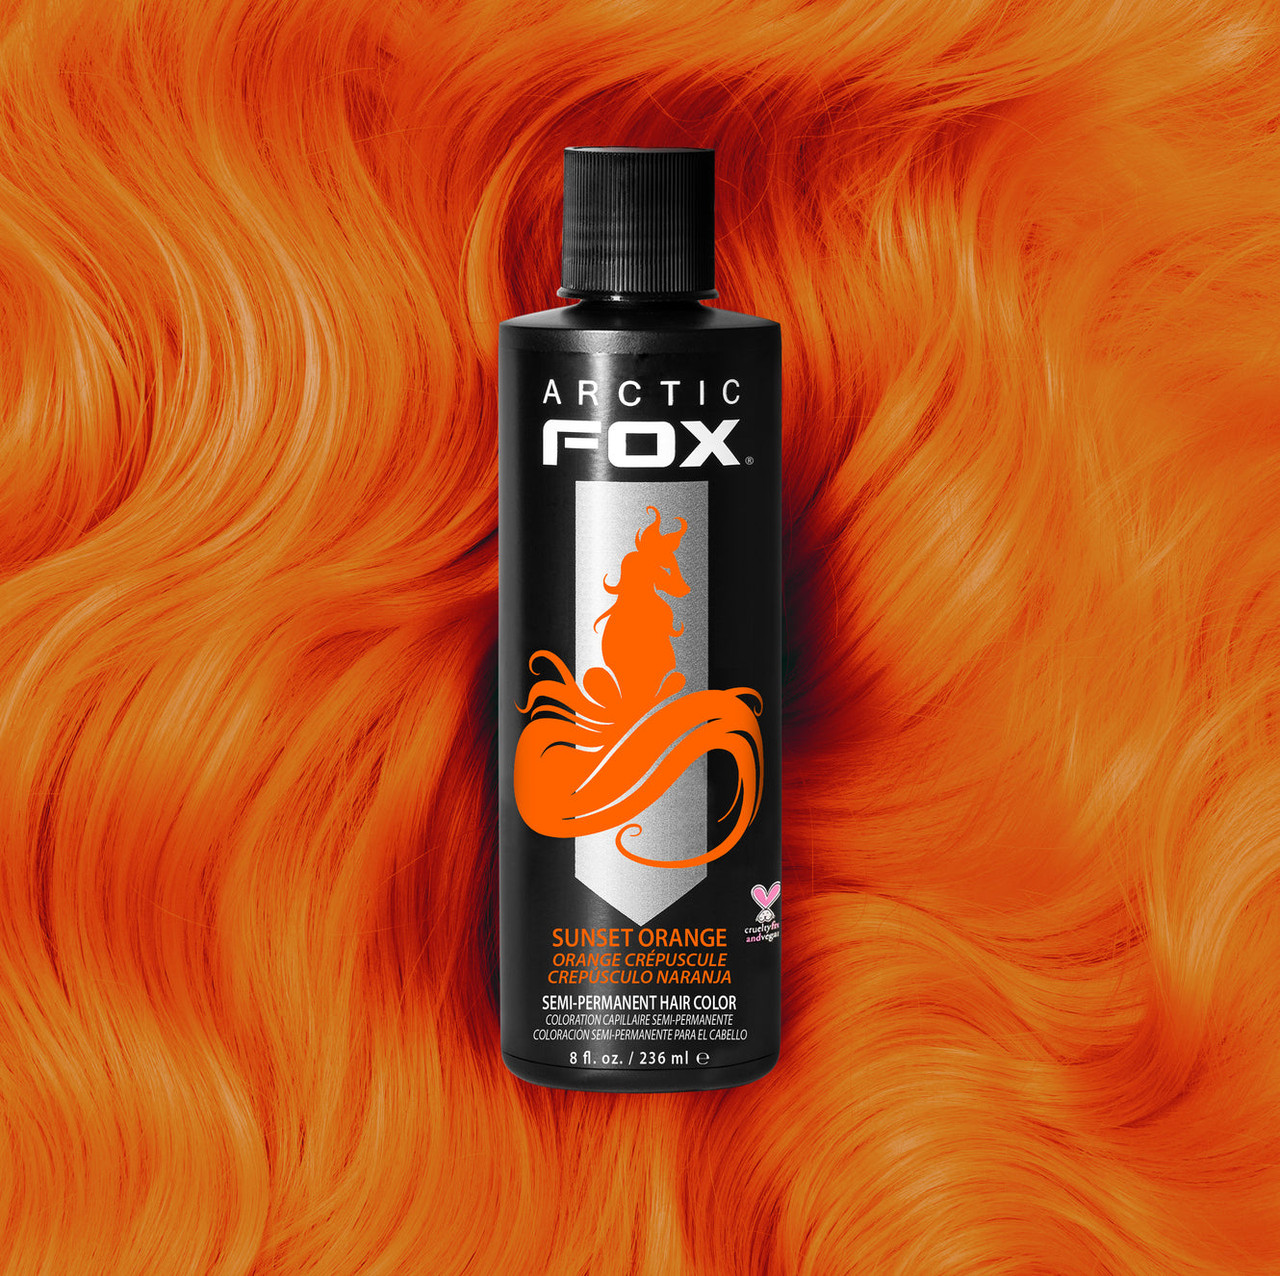 Arctic fox hair color sunset orange